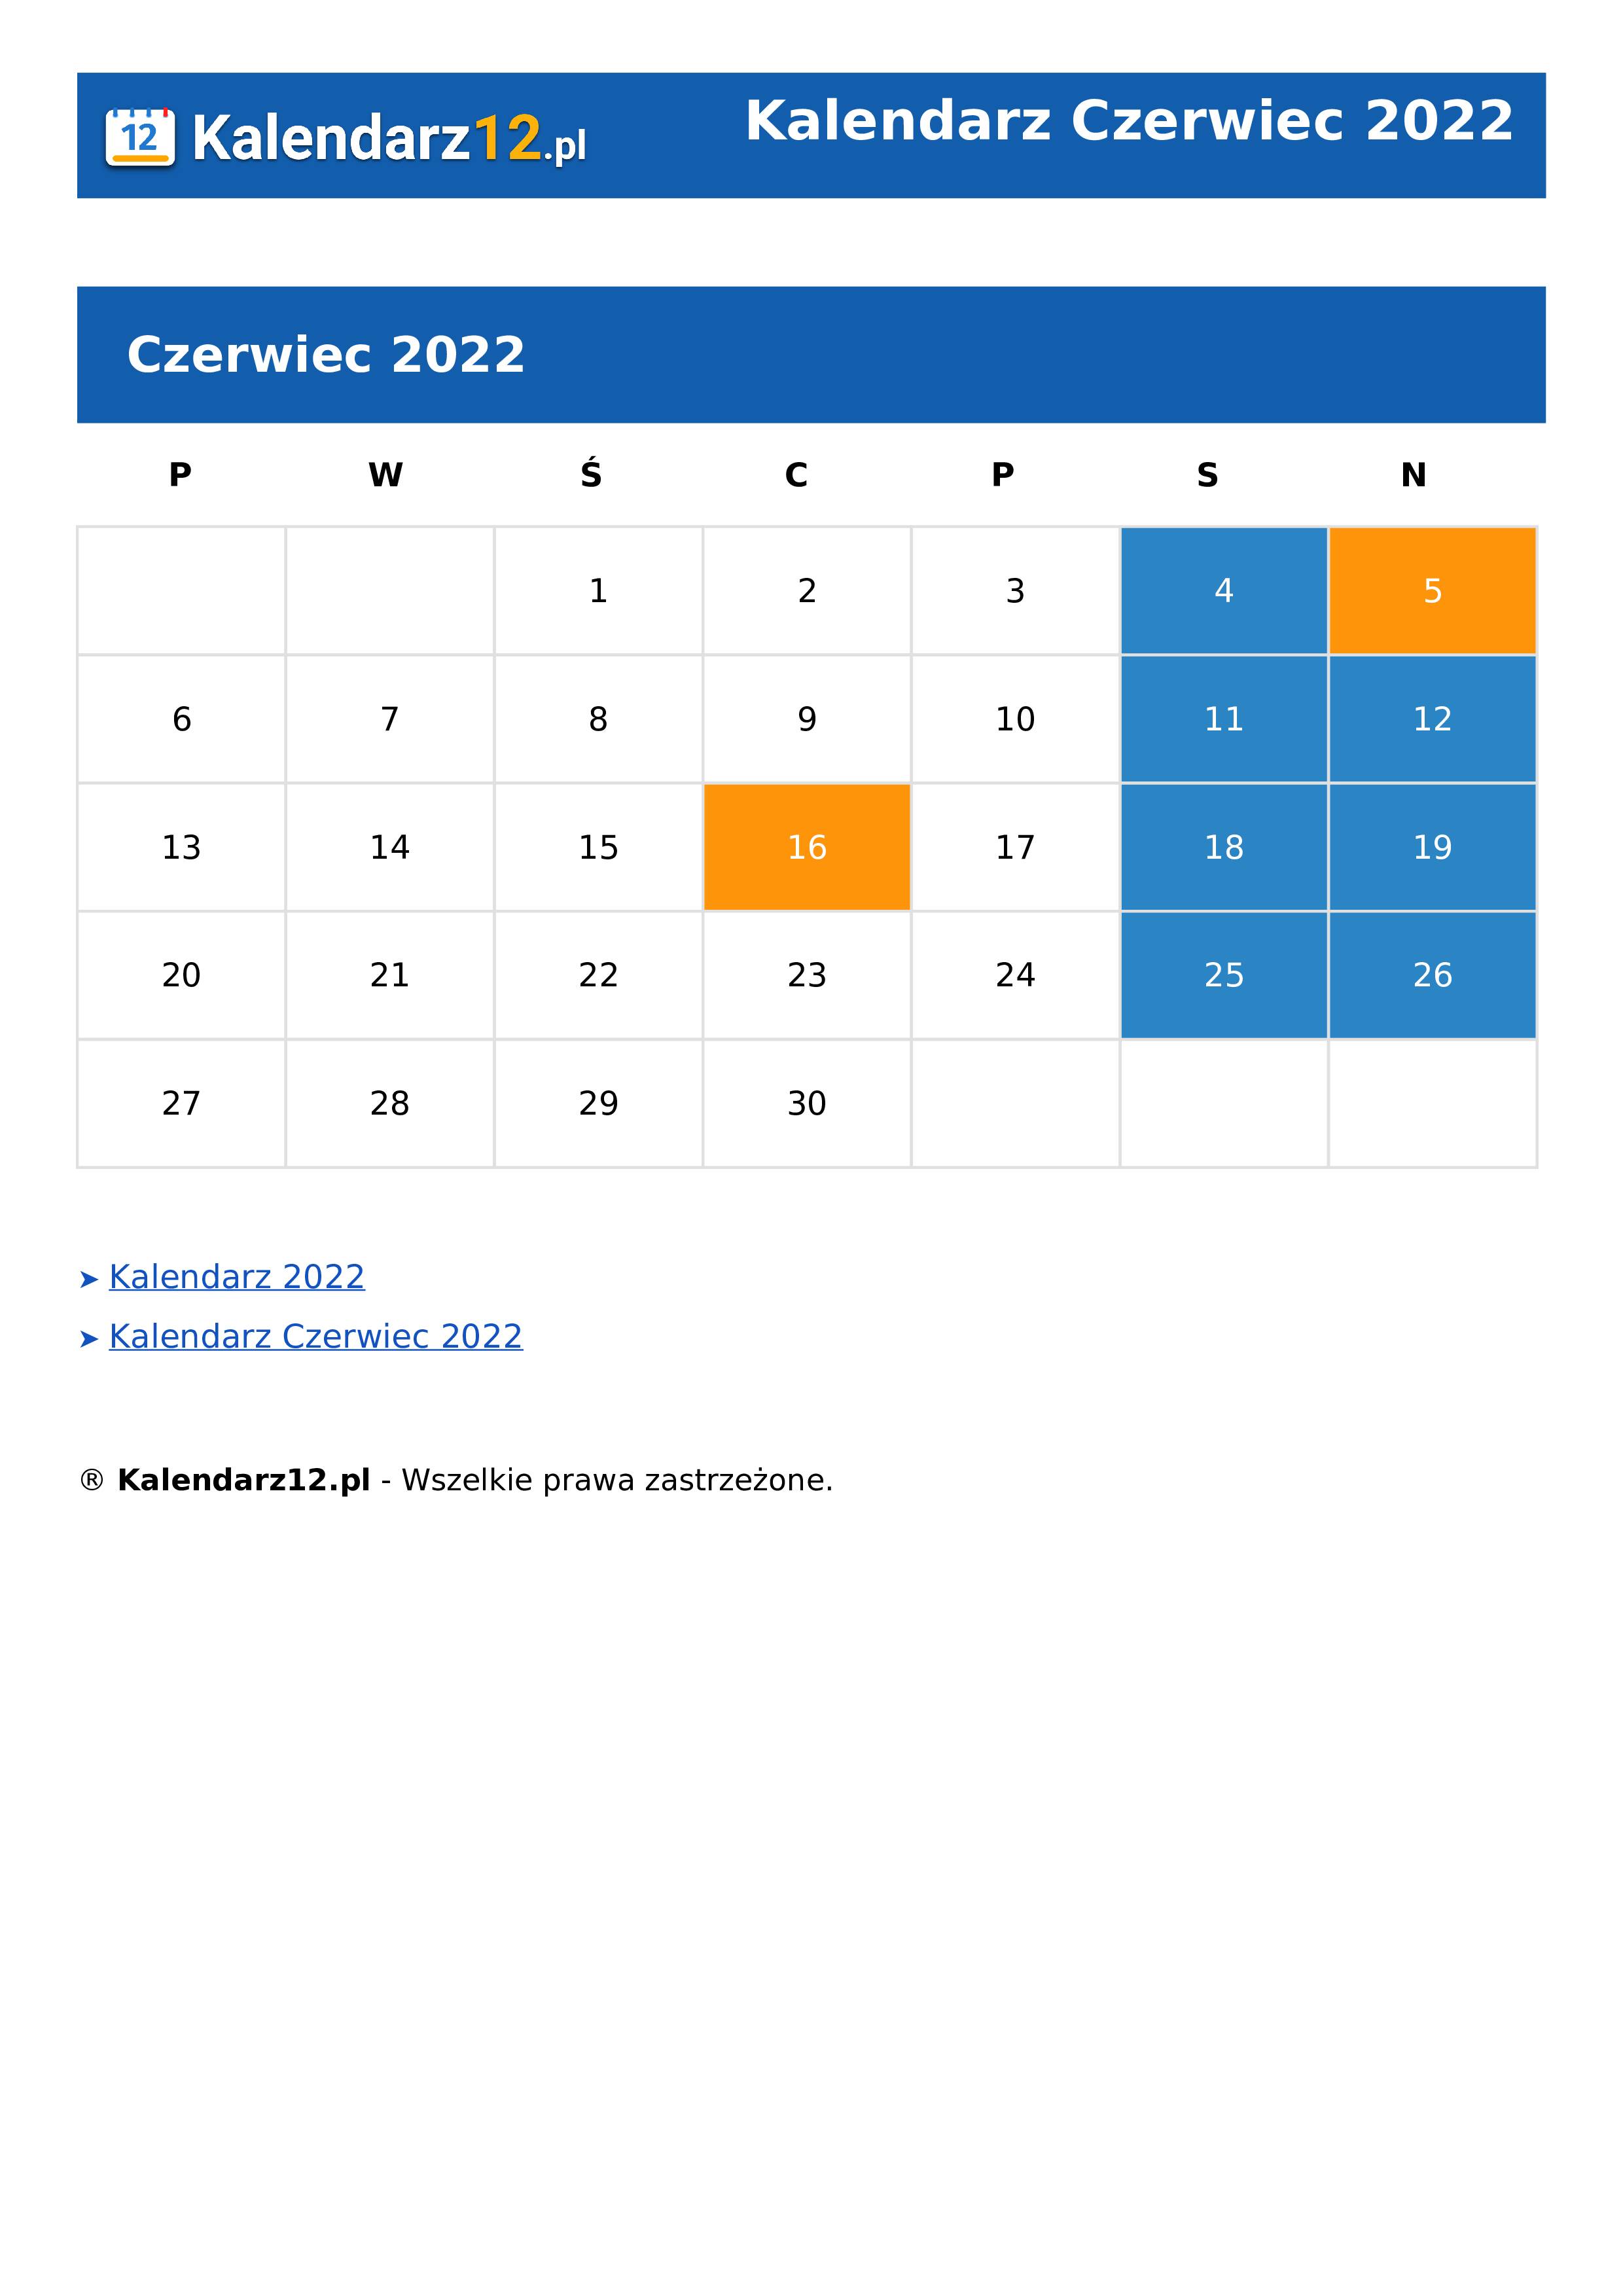 Calendar Czerwiec 2022